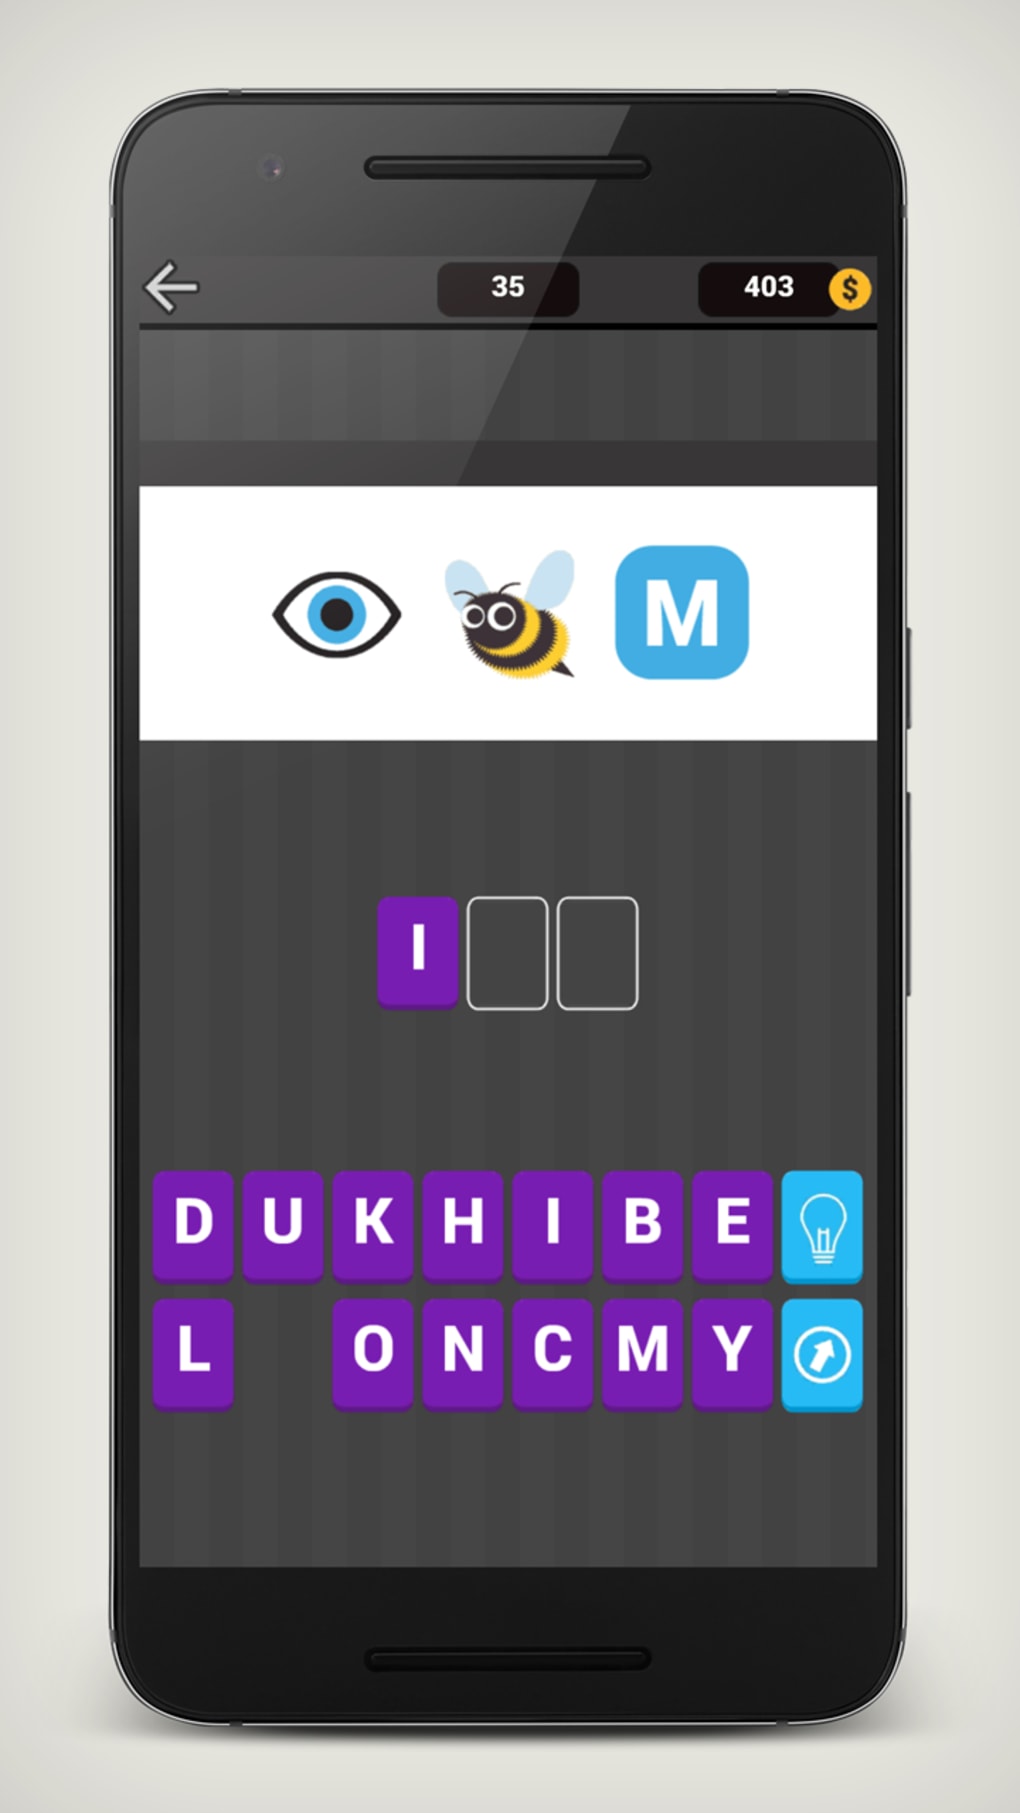 Guess Roblox Game By Emoji Quiz 